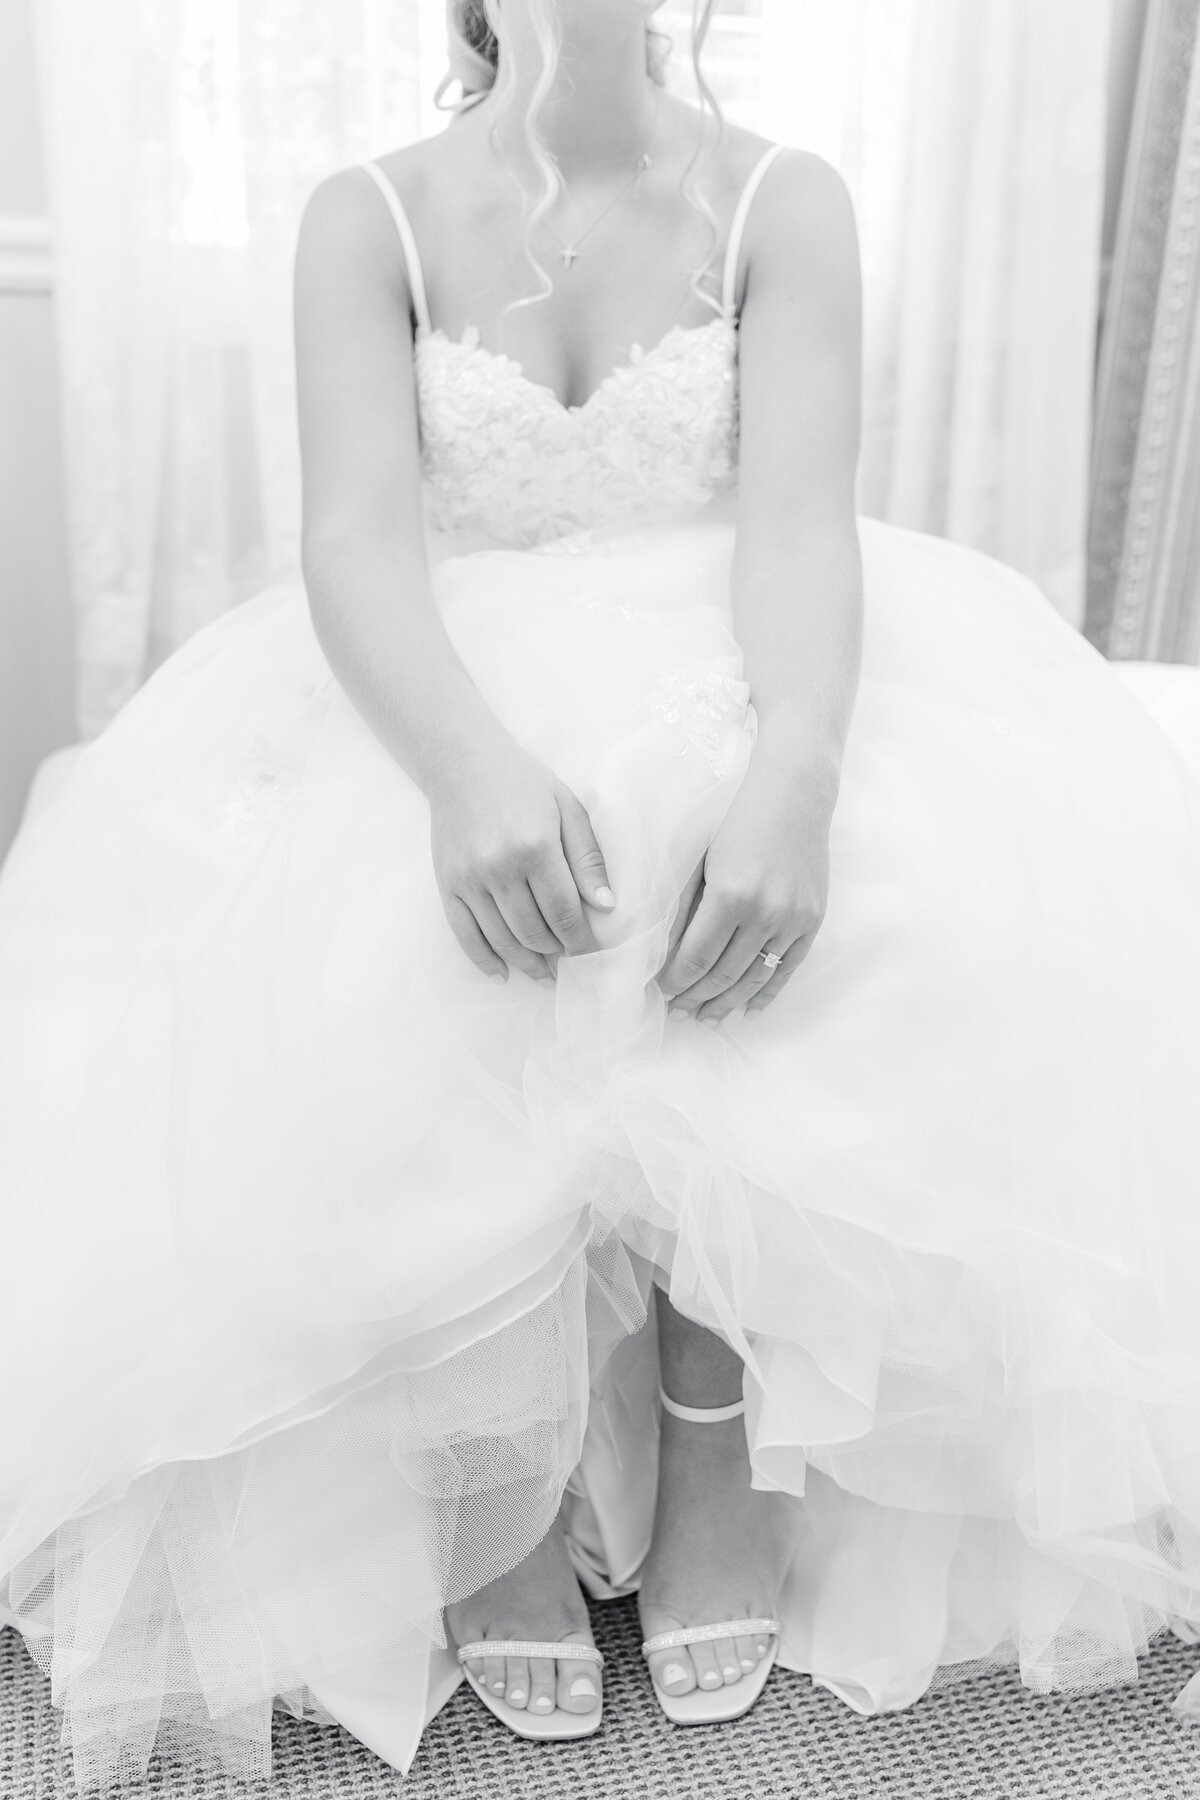 erica-lauren-photography-turnbull-barrett-primrose-cottage-wedding-getting-ready-aug-02-2020-268